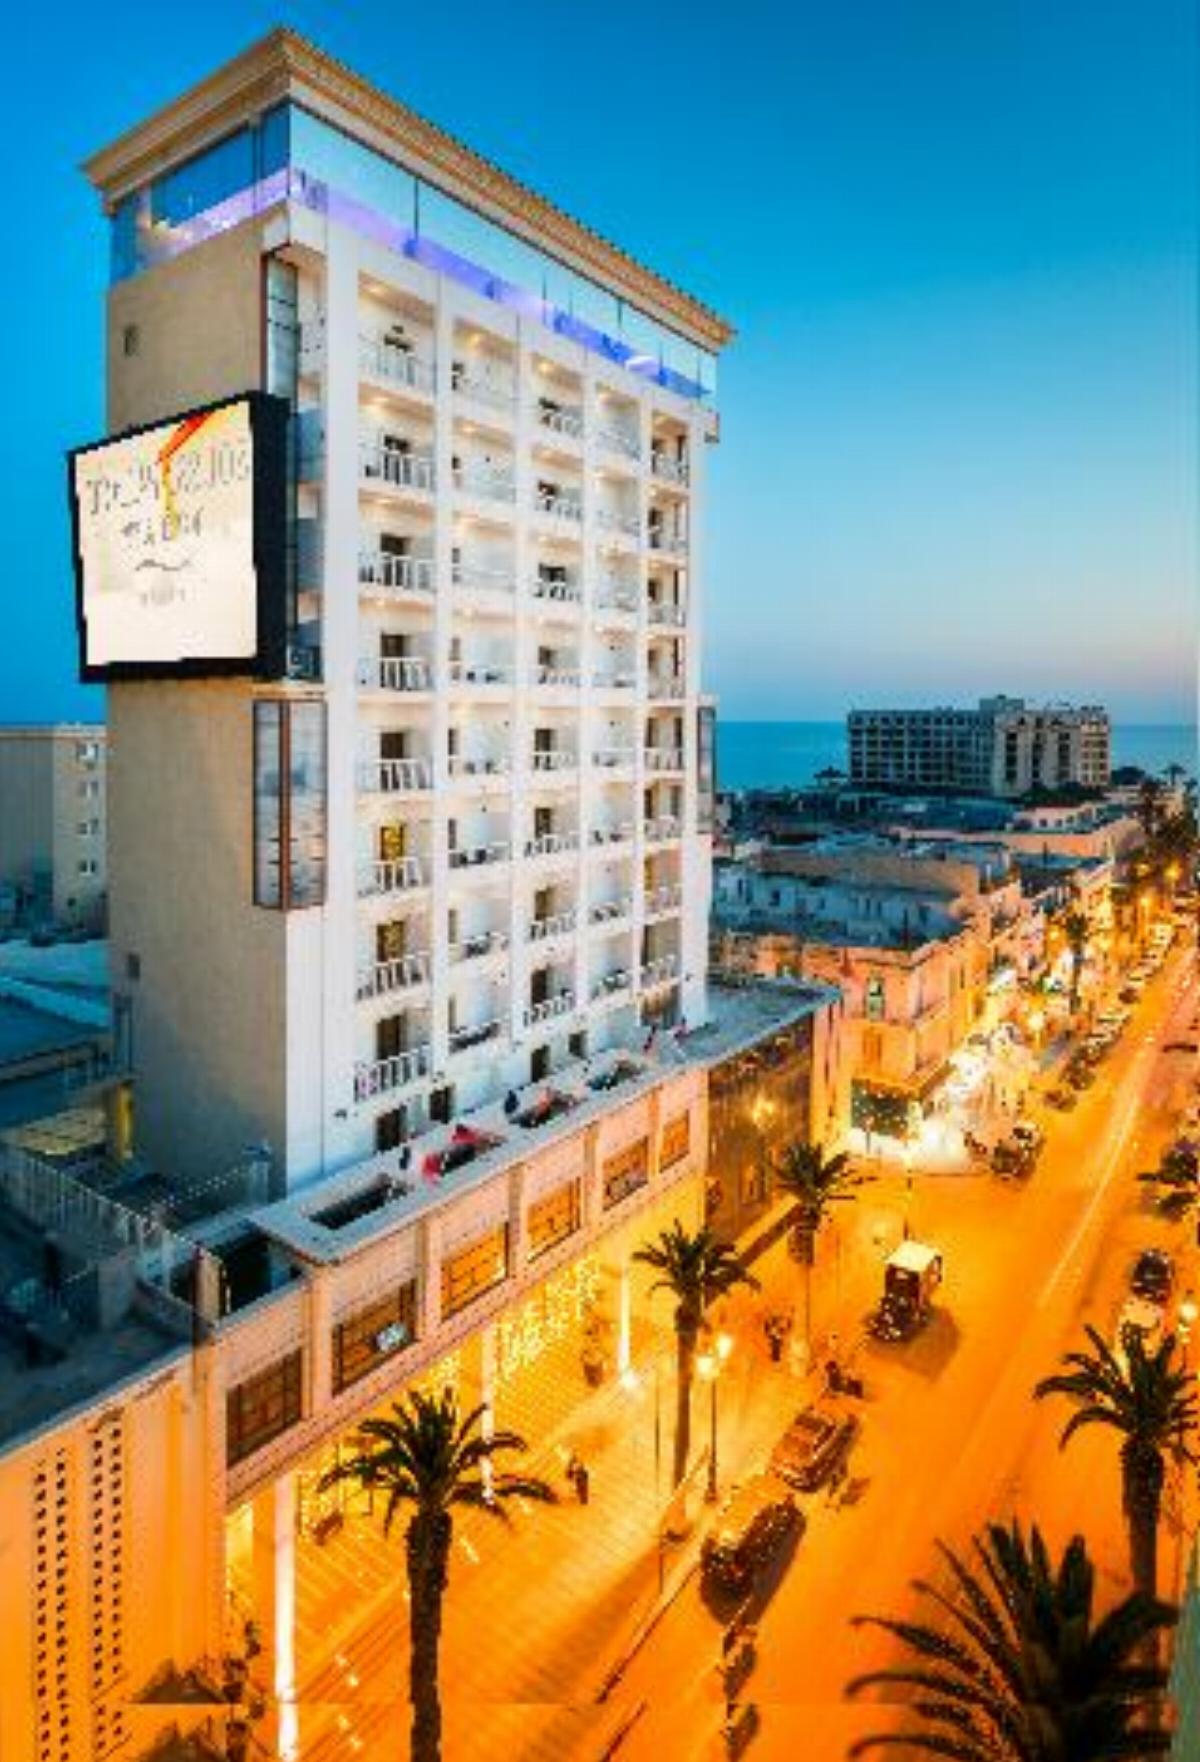 Sousse Palace Hotel Port El Kantaoui-Sousse Tunisia